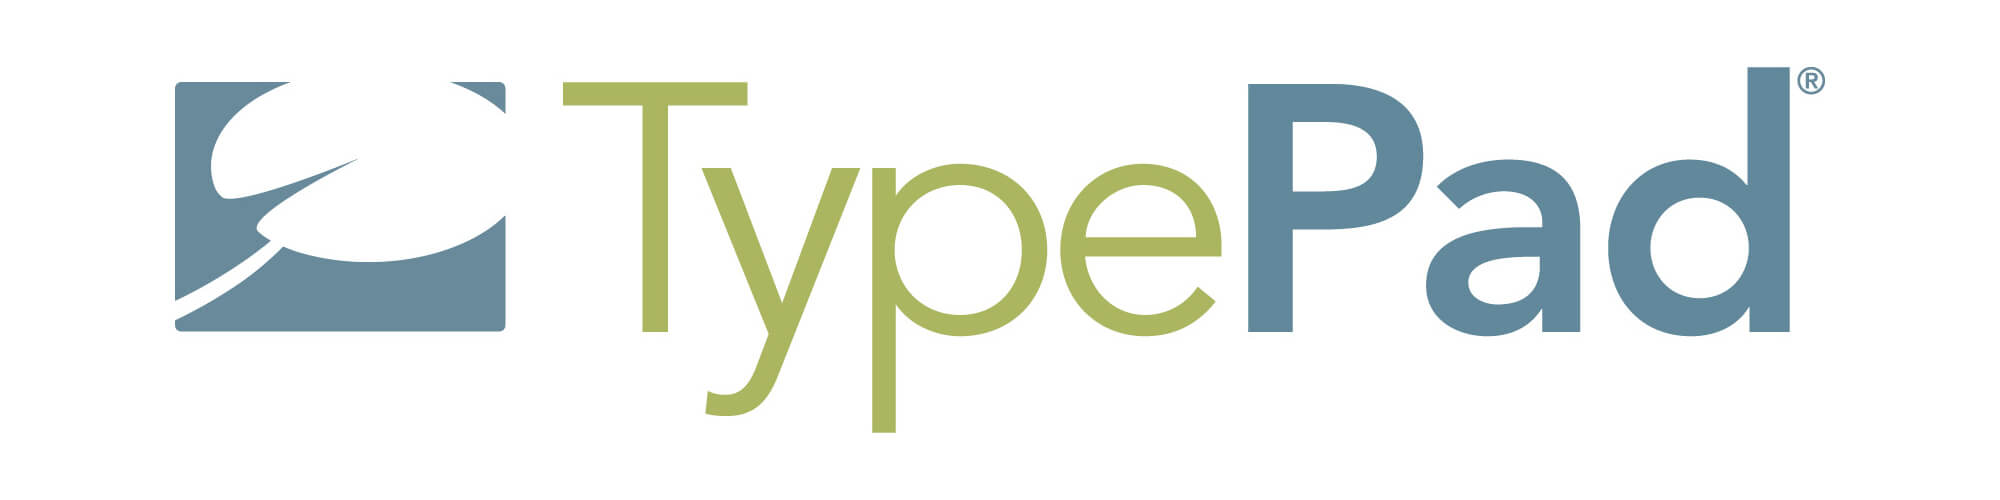 Typepad Content Management System (CMS)